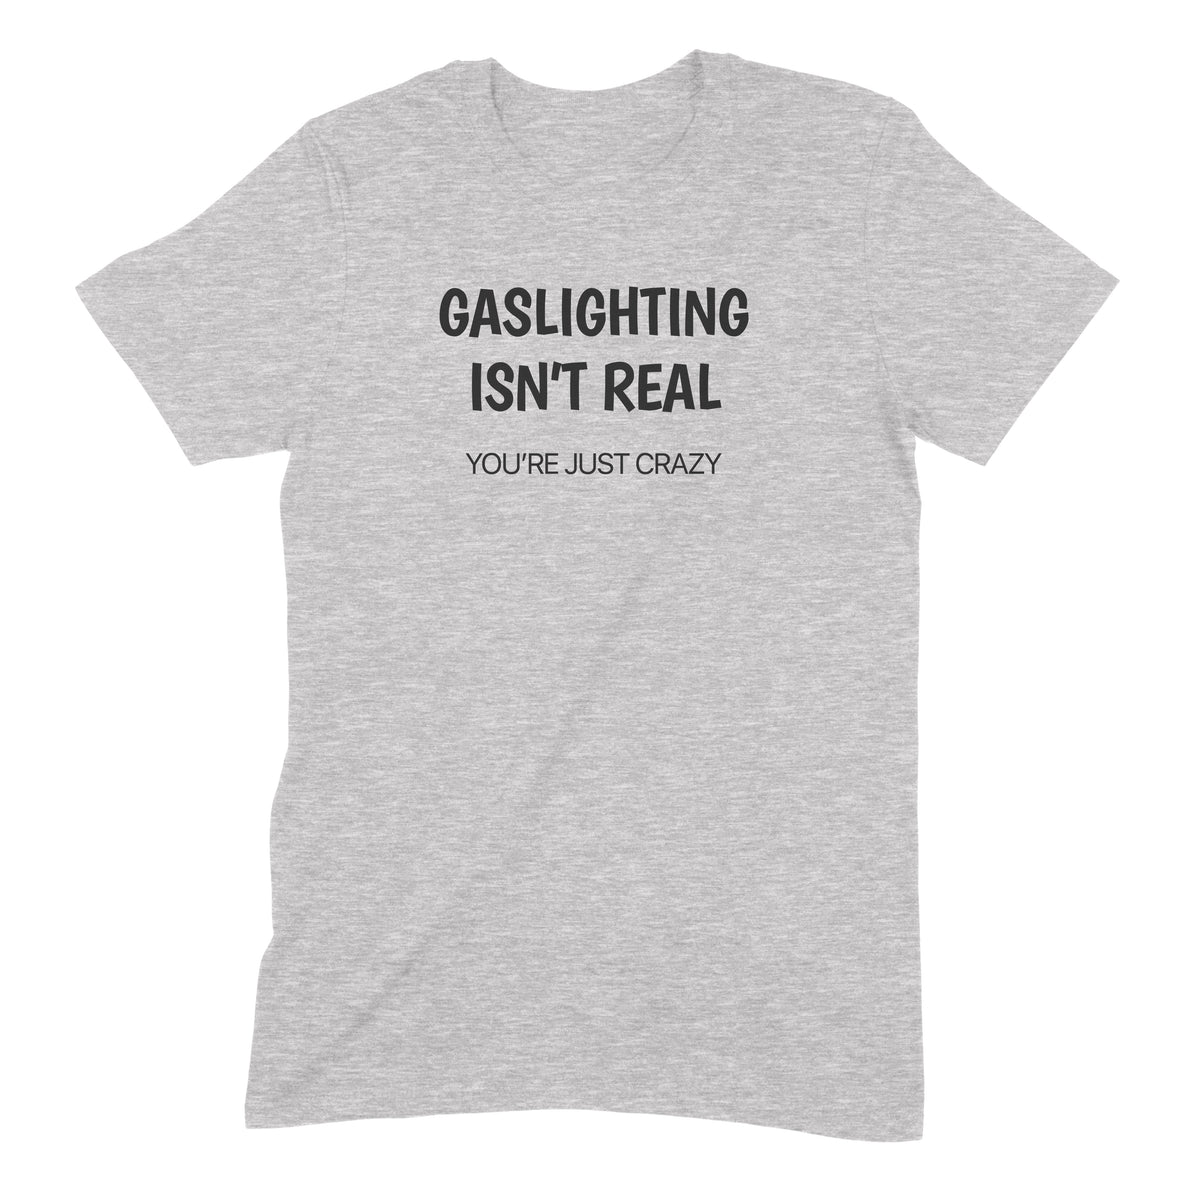 Gaslighting Isn't Real Premium Midweight Ringspun Cotton T-Shirt - Mens/Womens  Fits